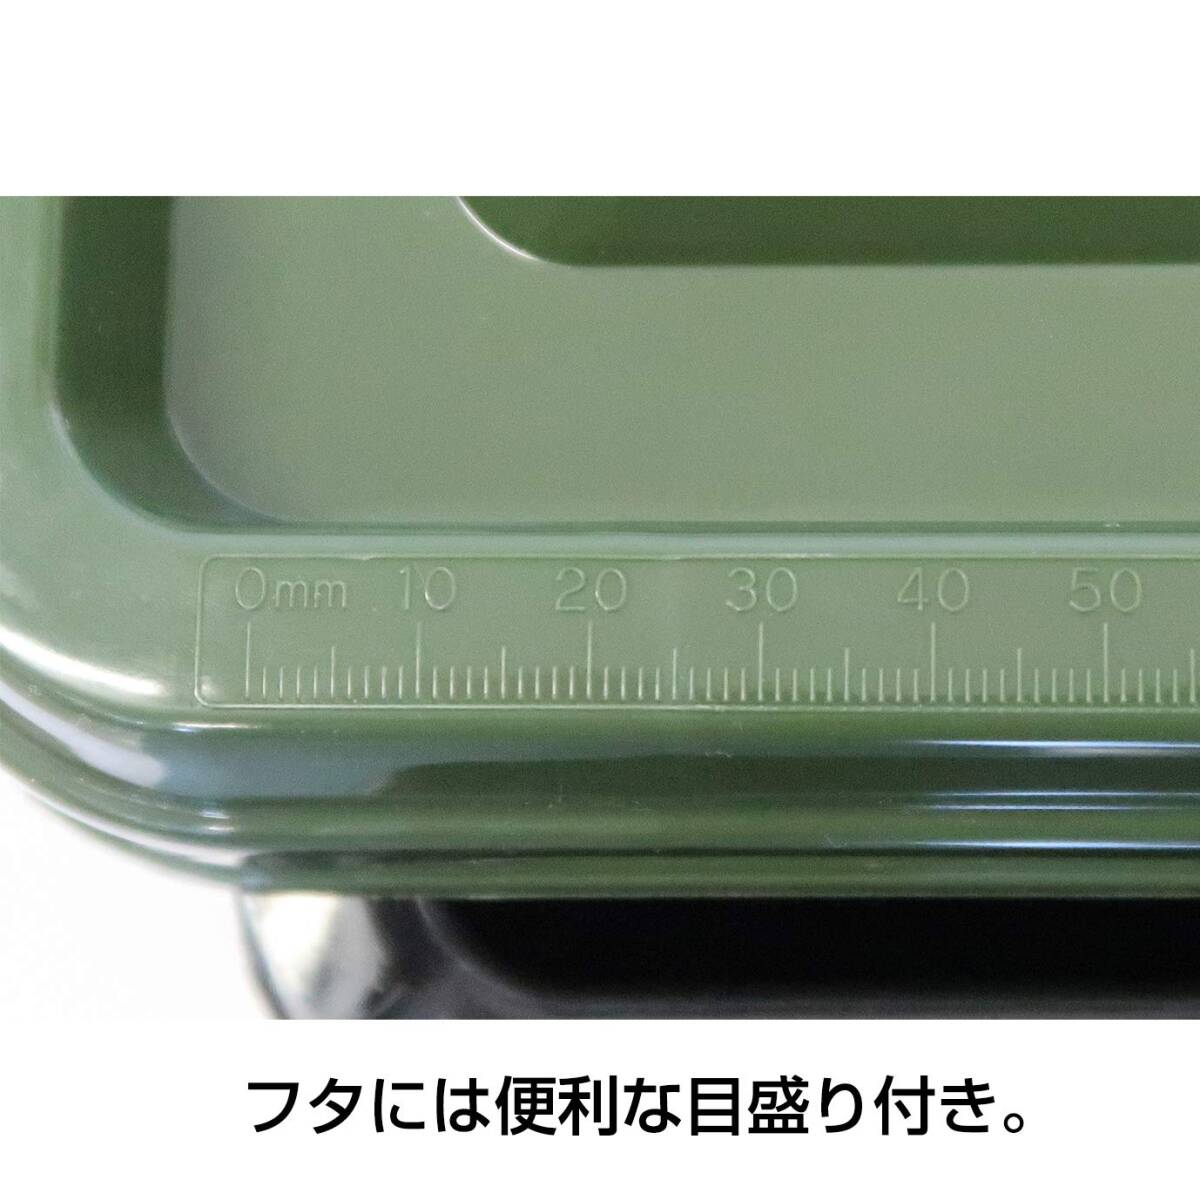 JEJアステージ 収納ボックス [Xシリーズ NTボックス #22] ブラックグリーン 幅38×奥行54.5×高さ18cm 日本製 積み重ね_画像3